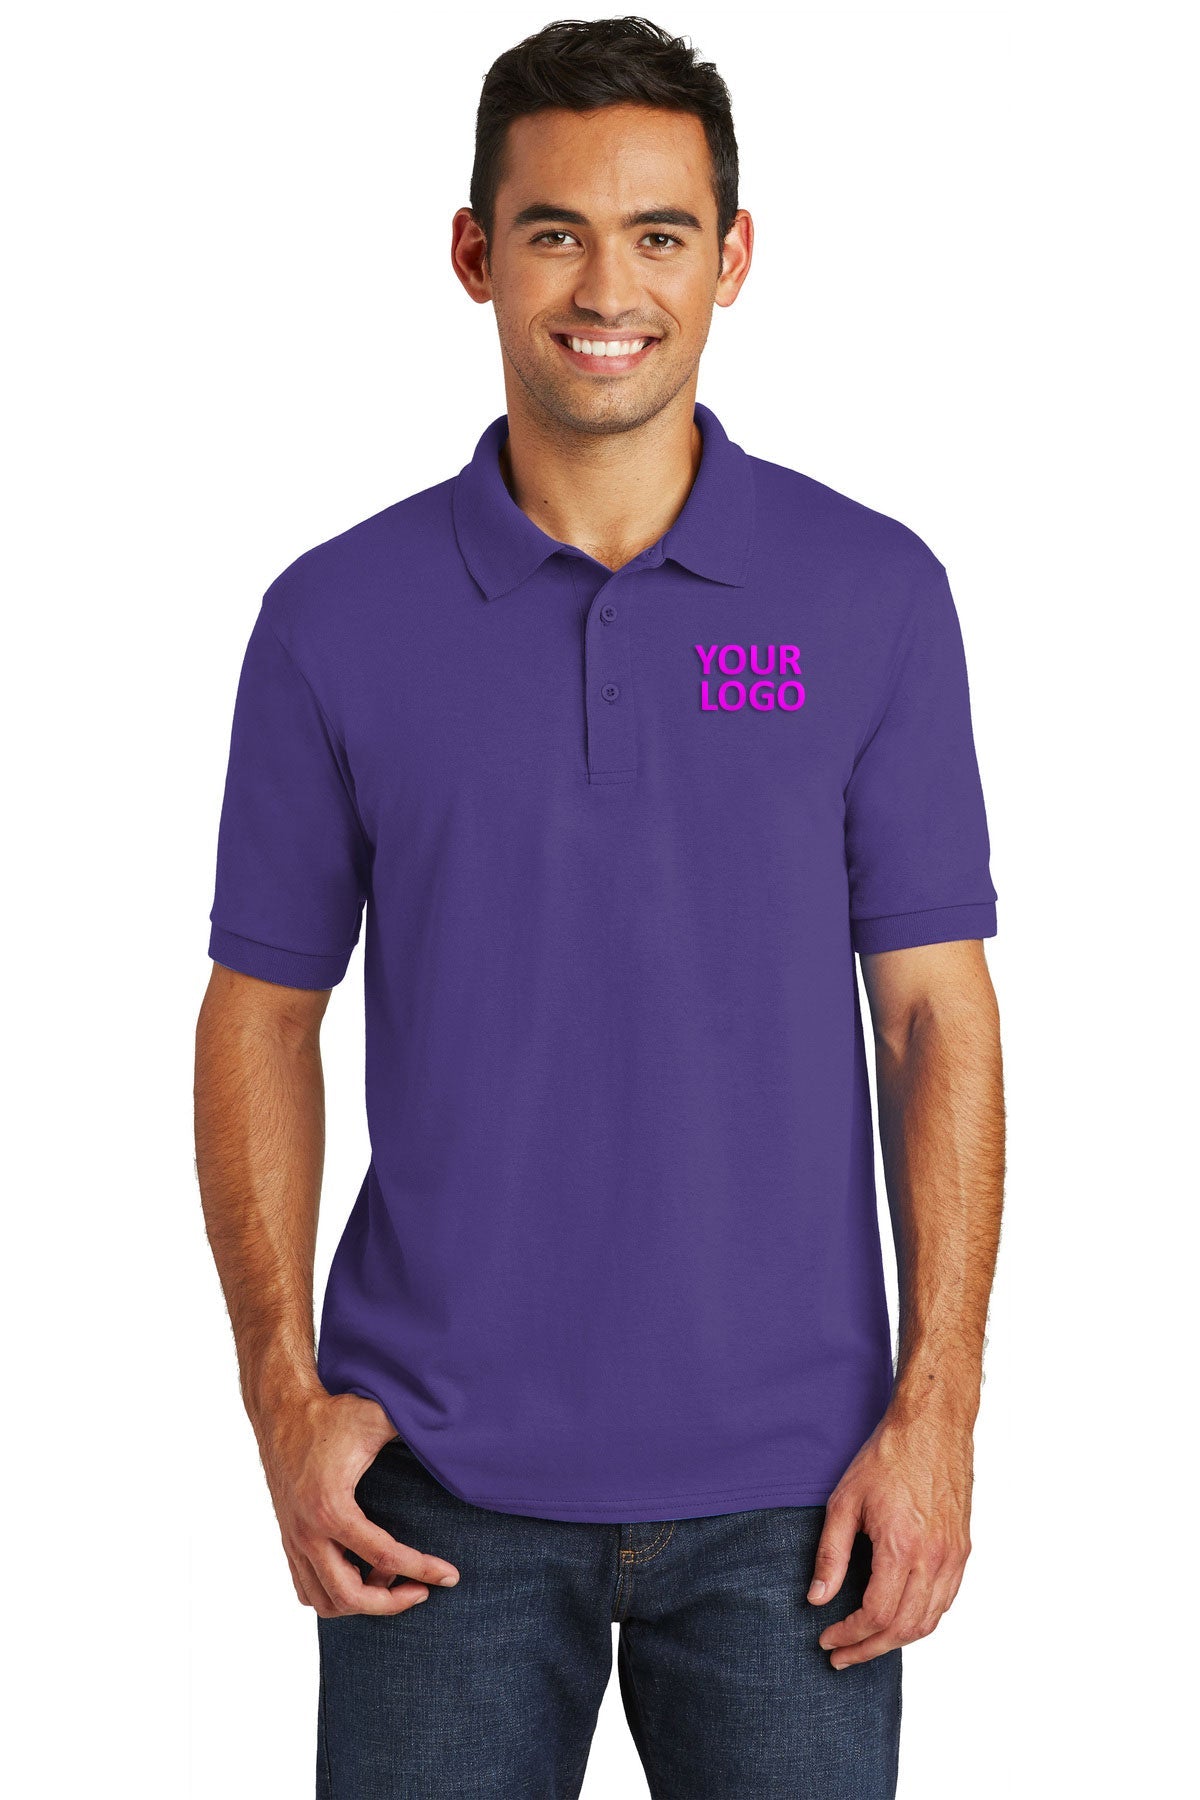 port & company purple kp55 custom logo polo shirts embroidered